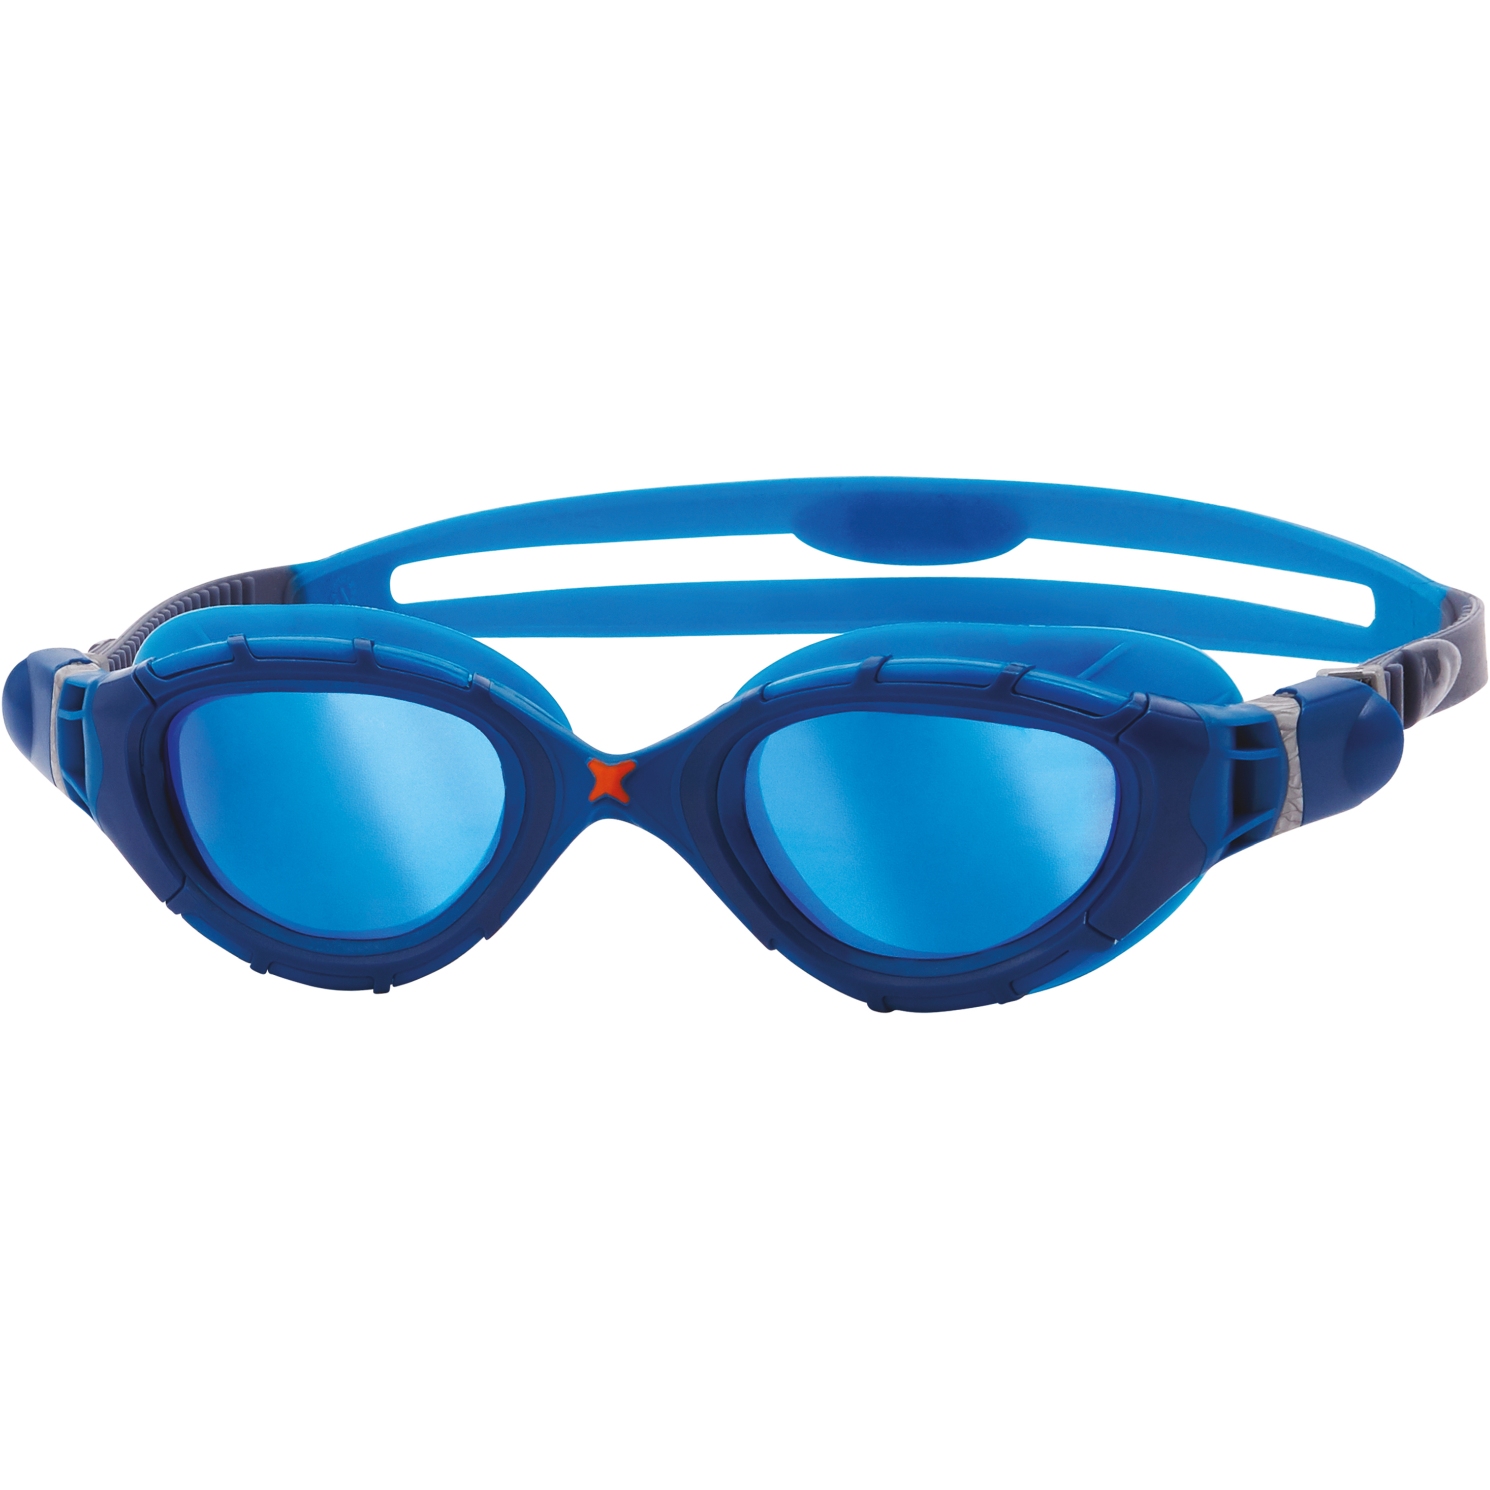 Productfoto van Zoggs Predator Flex Titanium Zwembril - Mirror Blue Lenses - Regular Fit - Blue/Blue